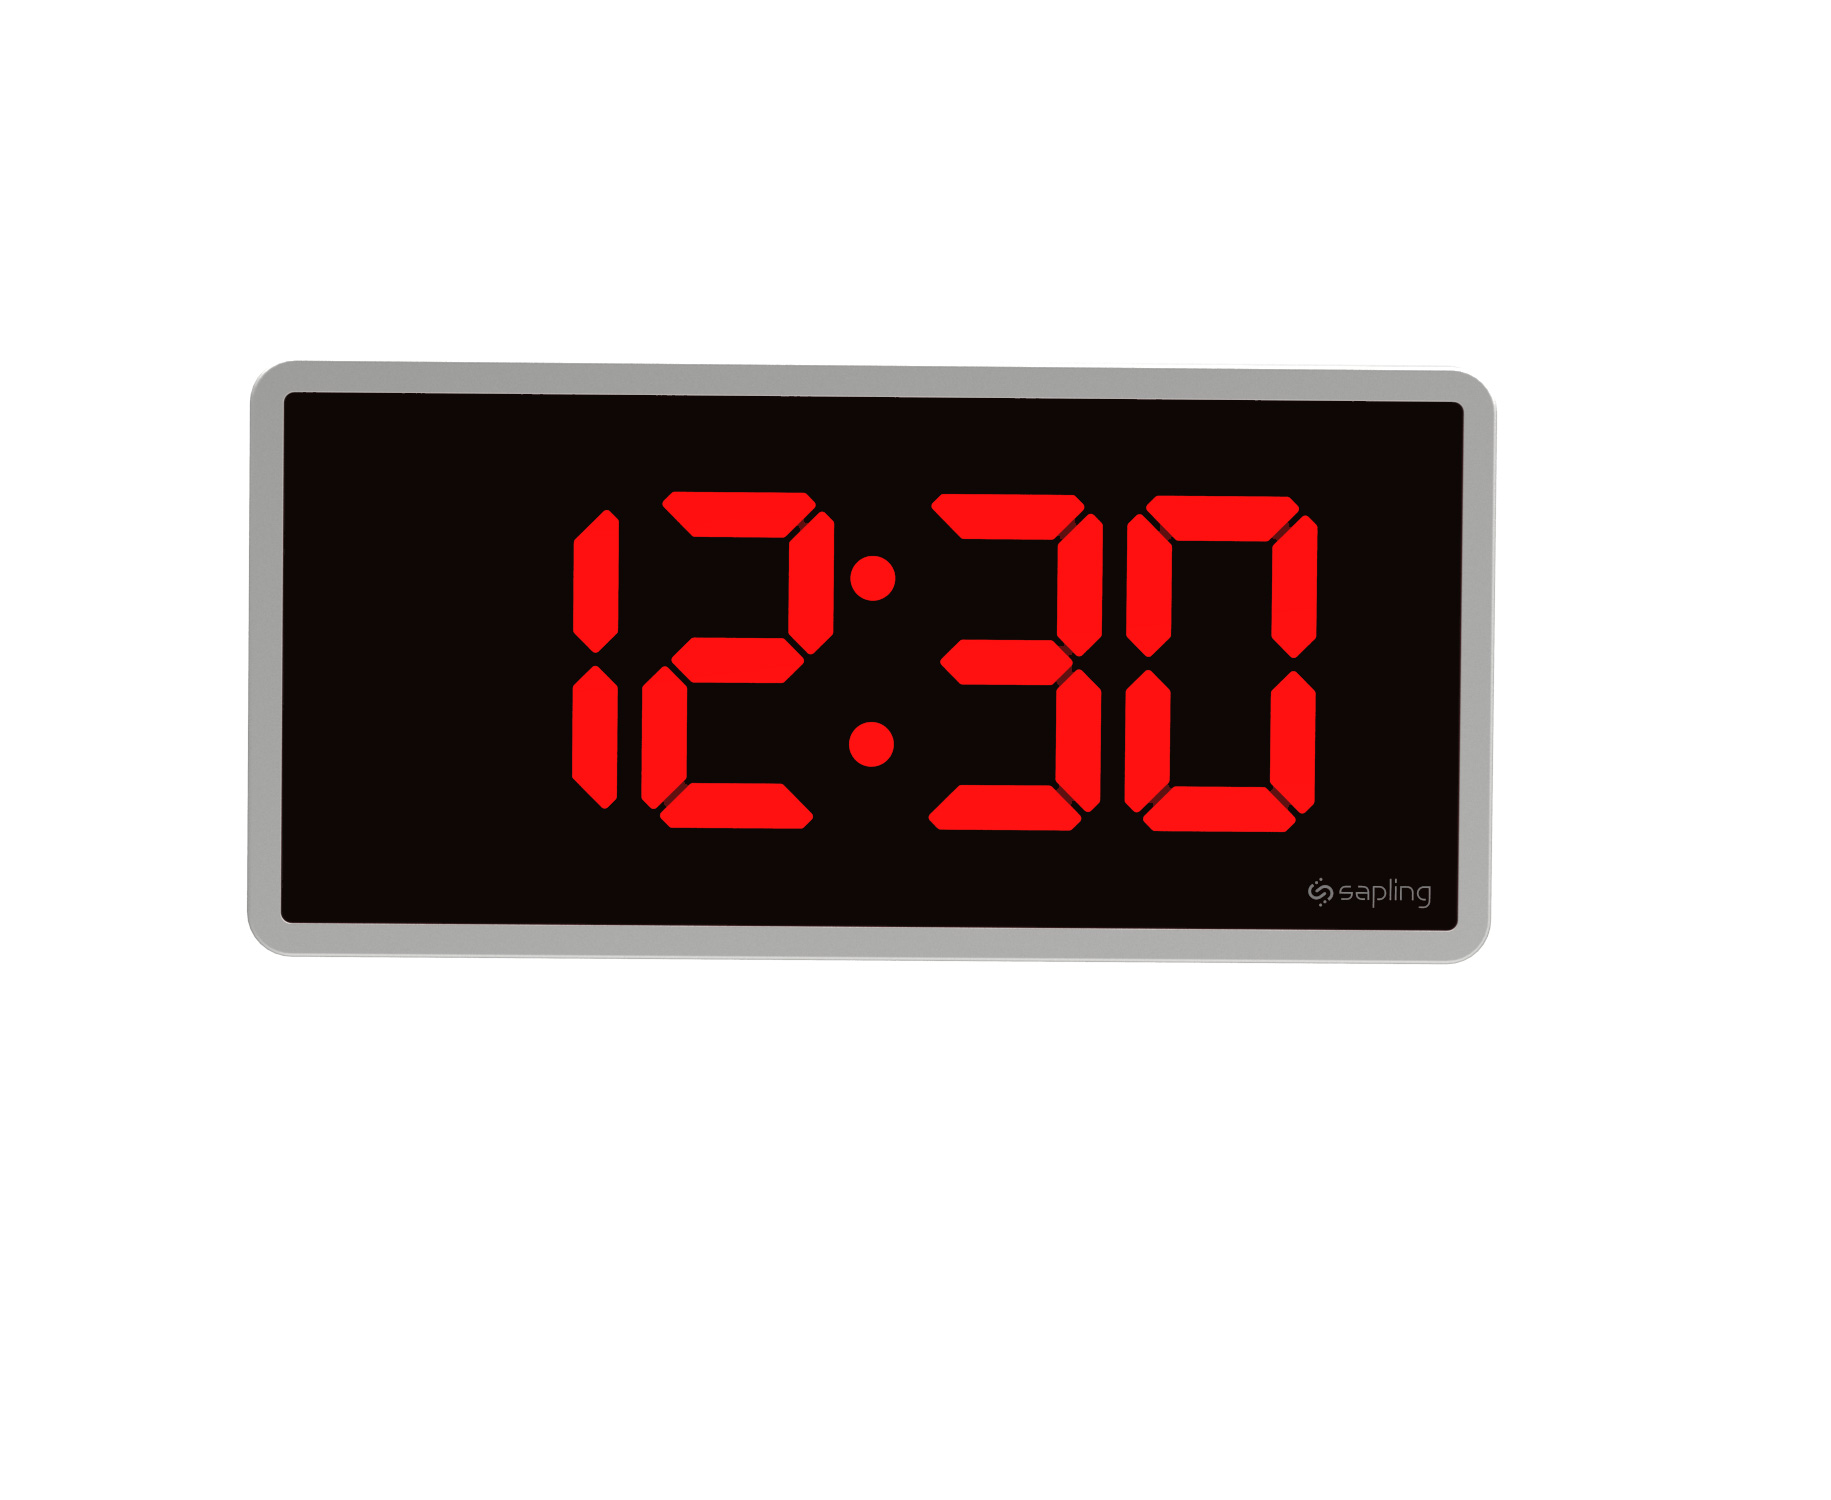 Картинка электронных часов. Часы Digital Clock 200730138828.4. Часы led number Clock 3615. Электронные часы диджитал клок 1018. Электронные часы CW 8057.